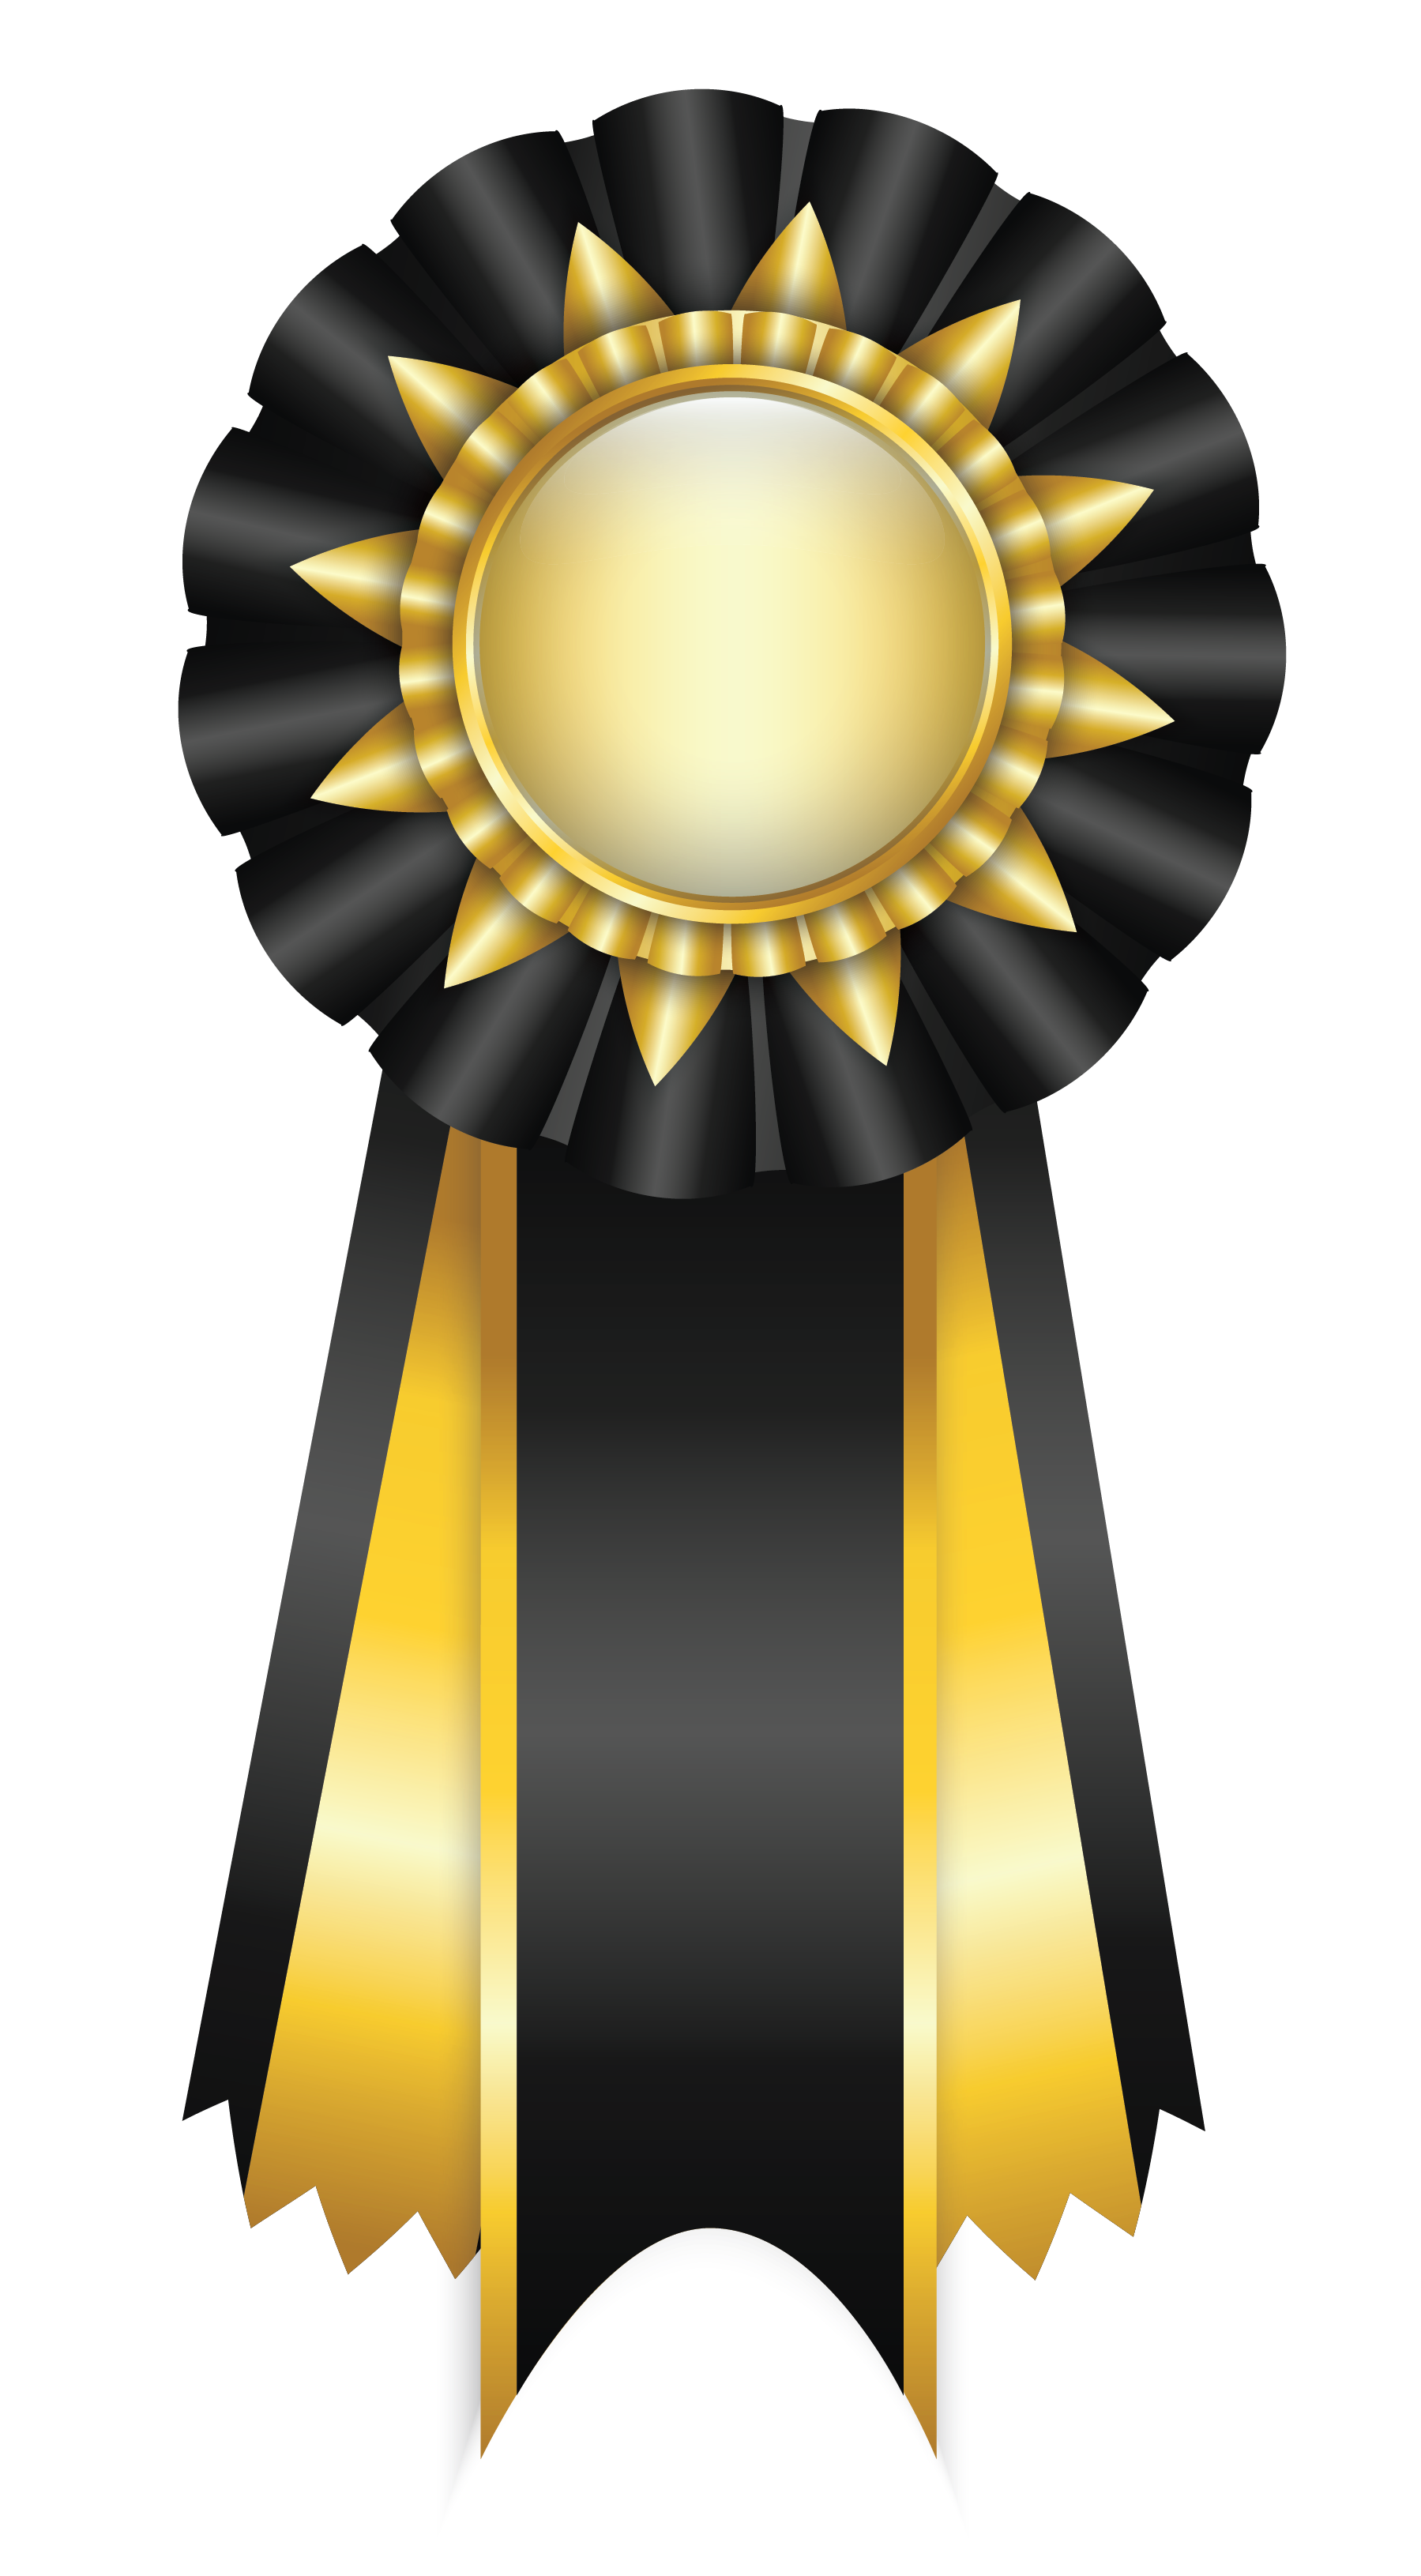 Blank Award Ribbon PNG High-Quality Image